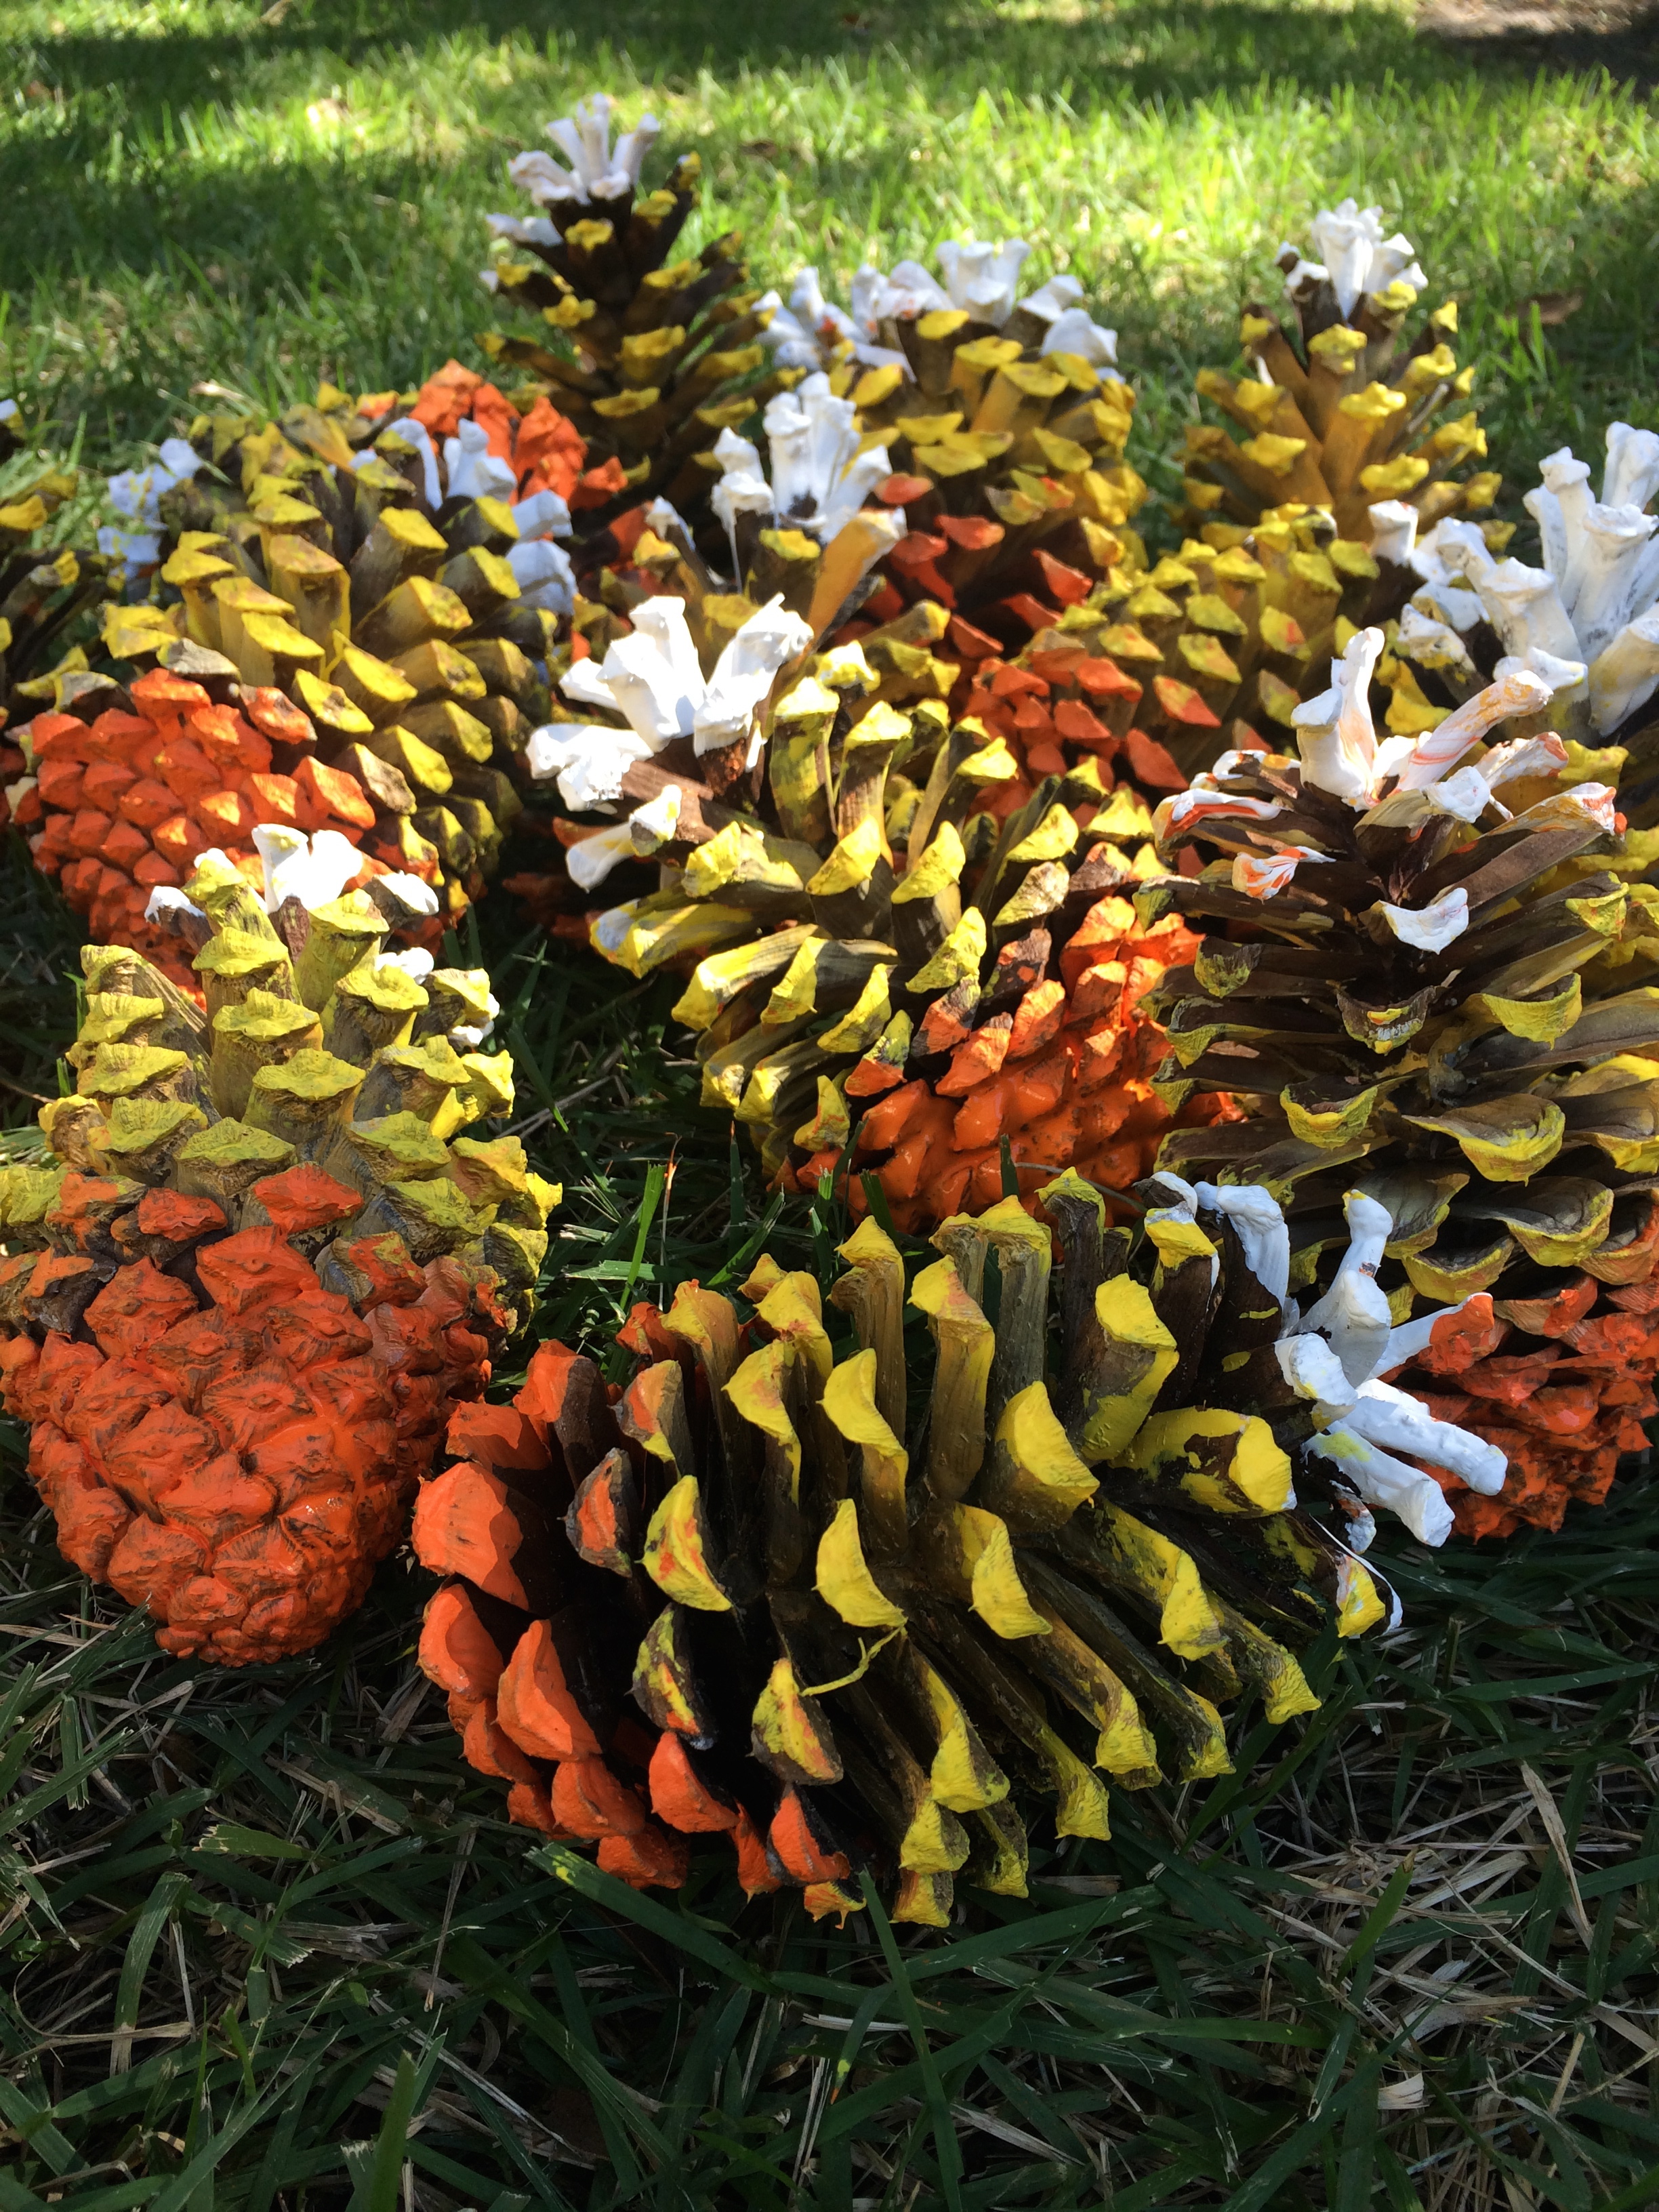 DIY Candy Corn Decor with Pine Cones – Sustain My Craft Habit